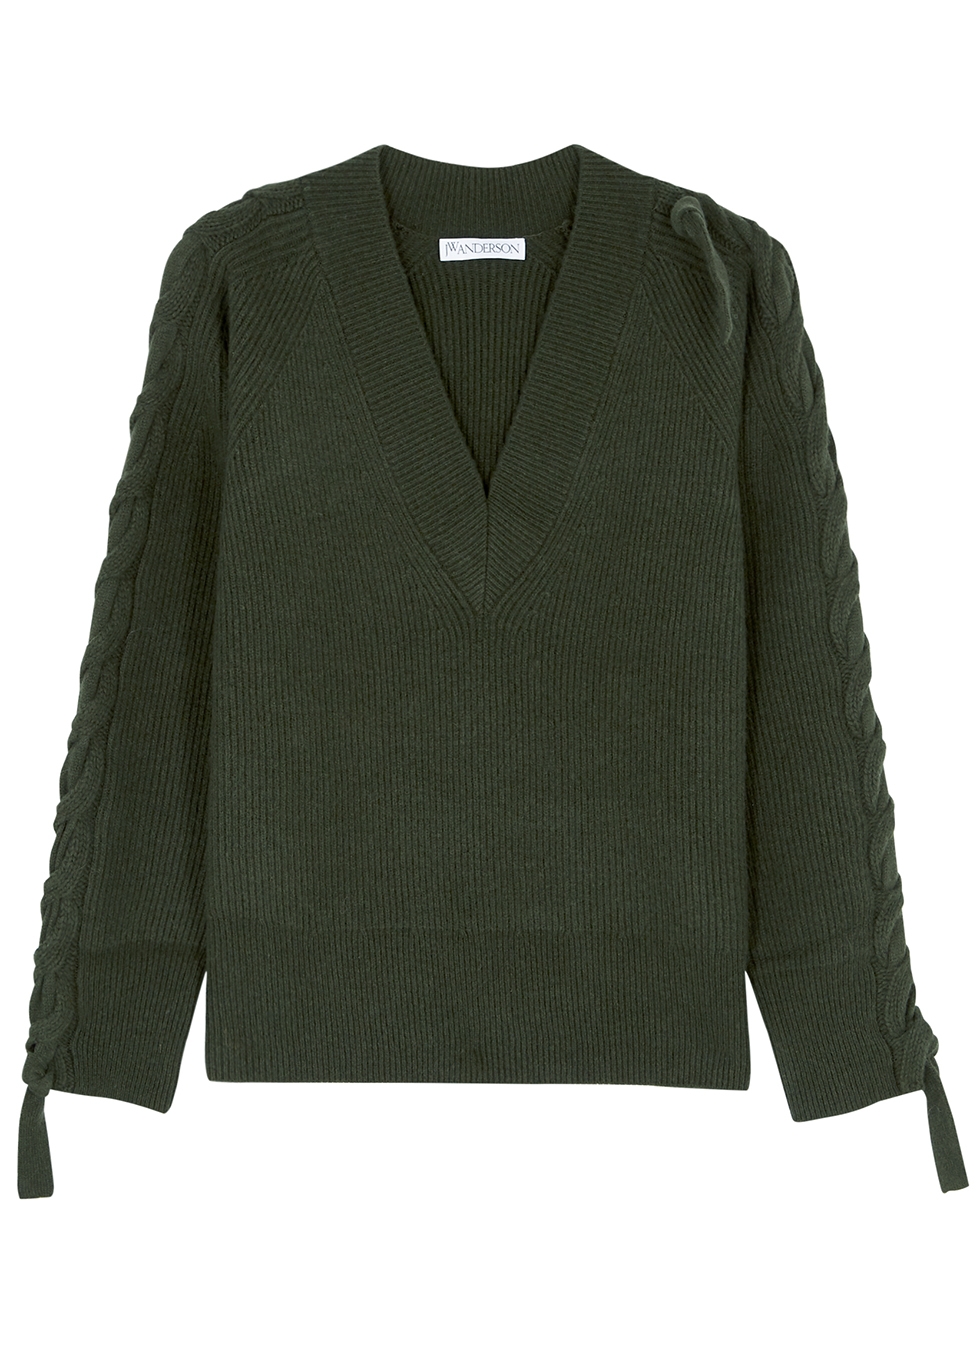 Army green wool-blend jumper